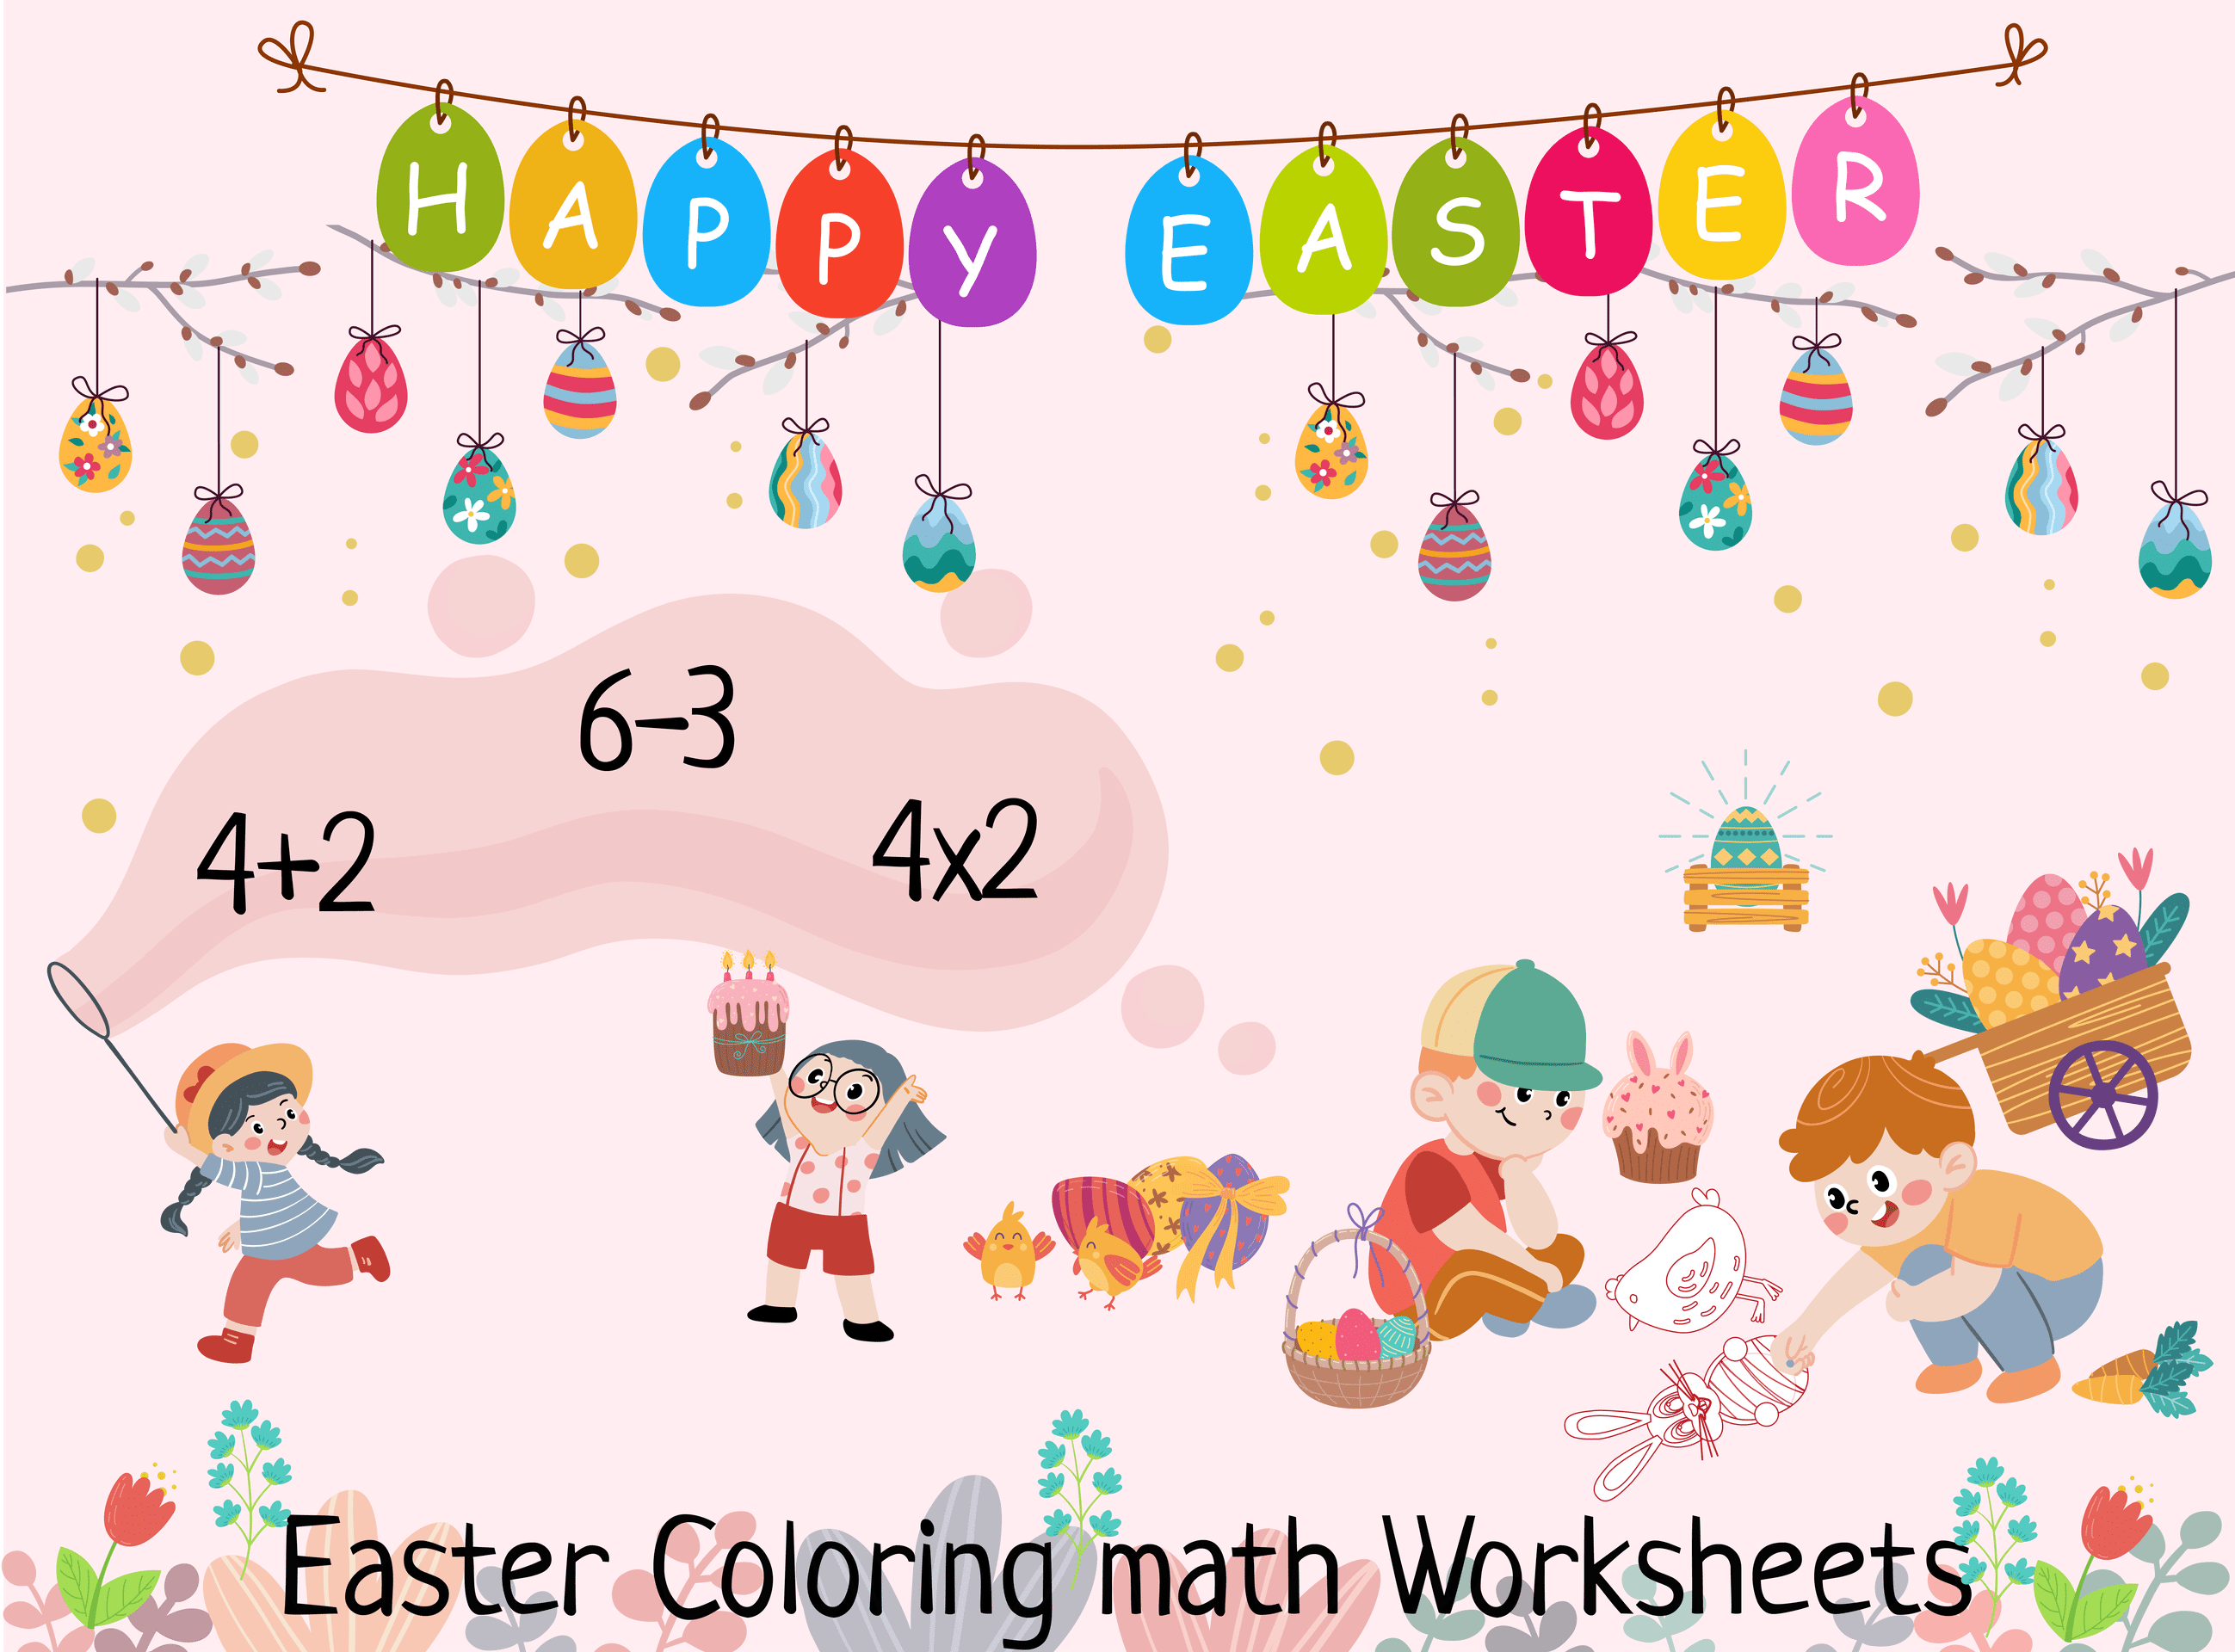 10 Free Easter Coloring Math Worksheets | Fun Printable